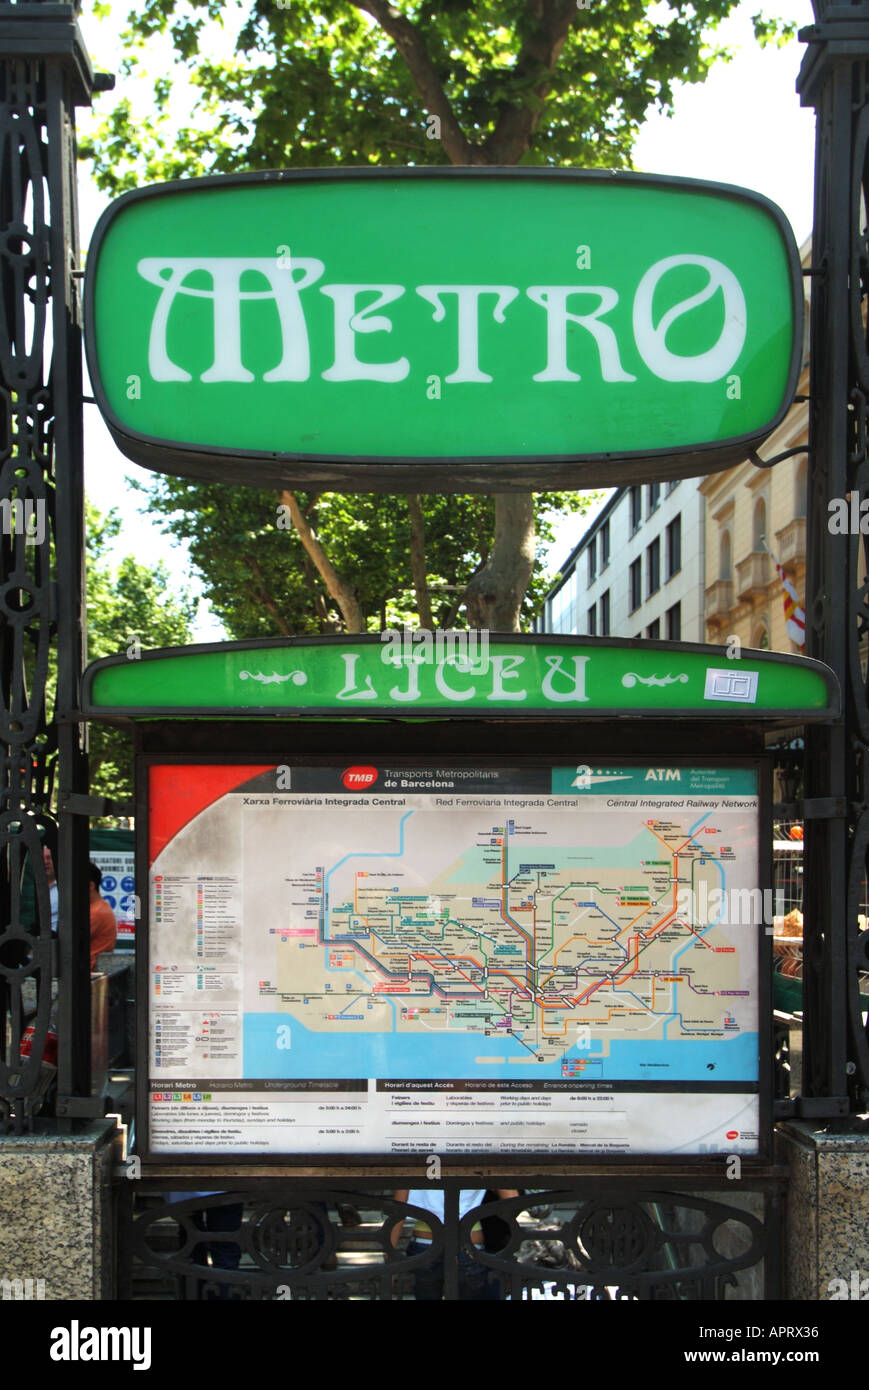 Barcelona Metro underground station sign and route map Las Ramblas Stock  Photo - Alamy